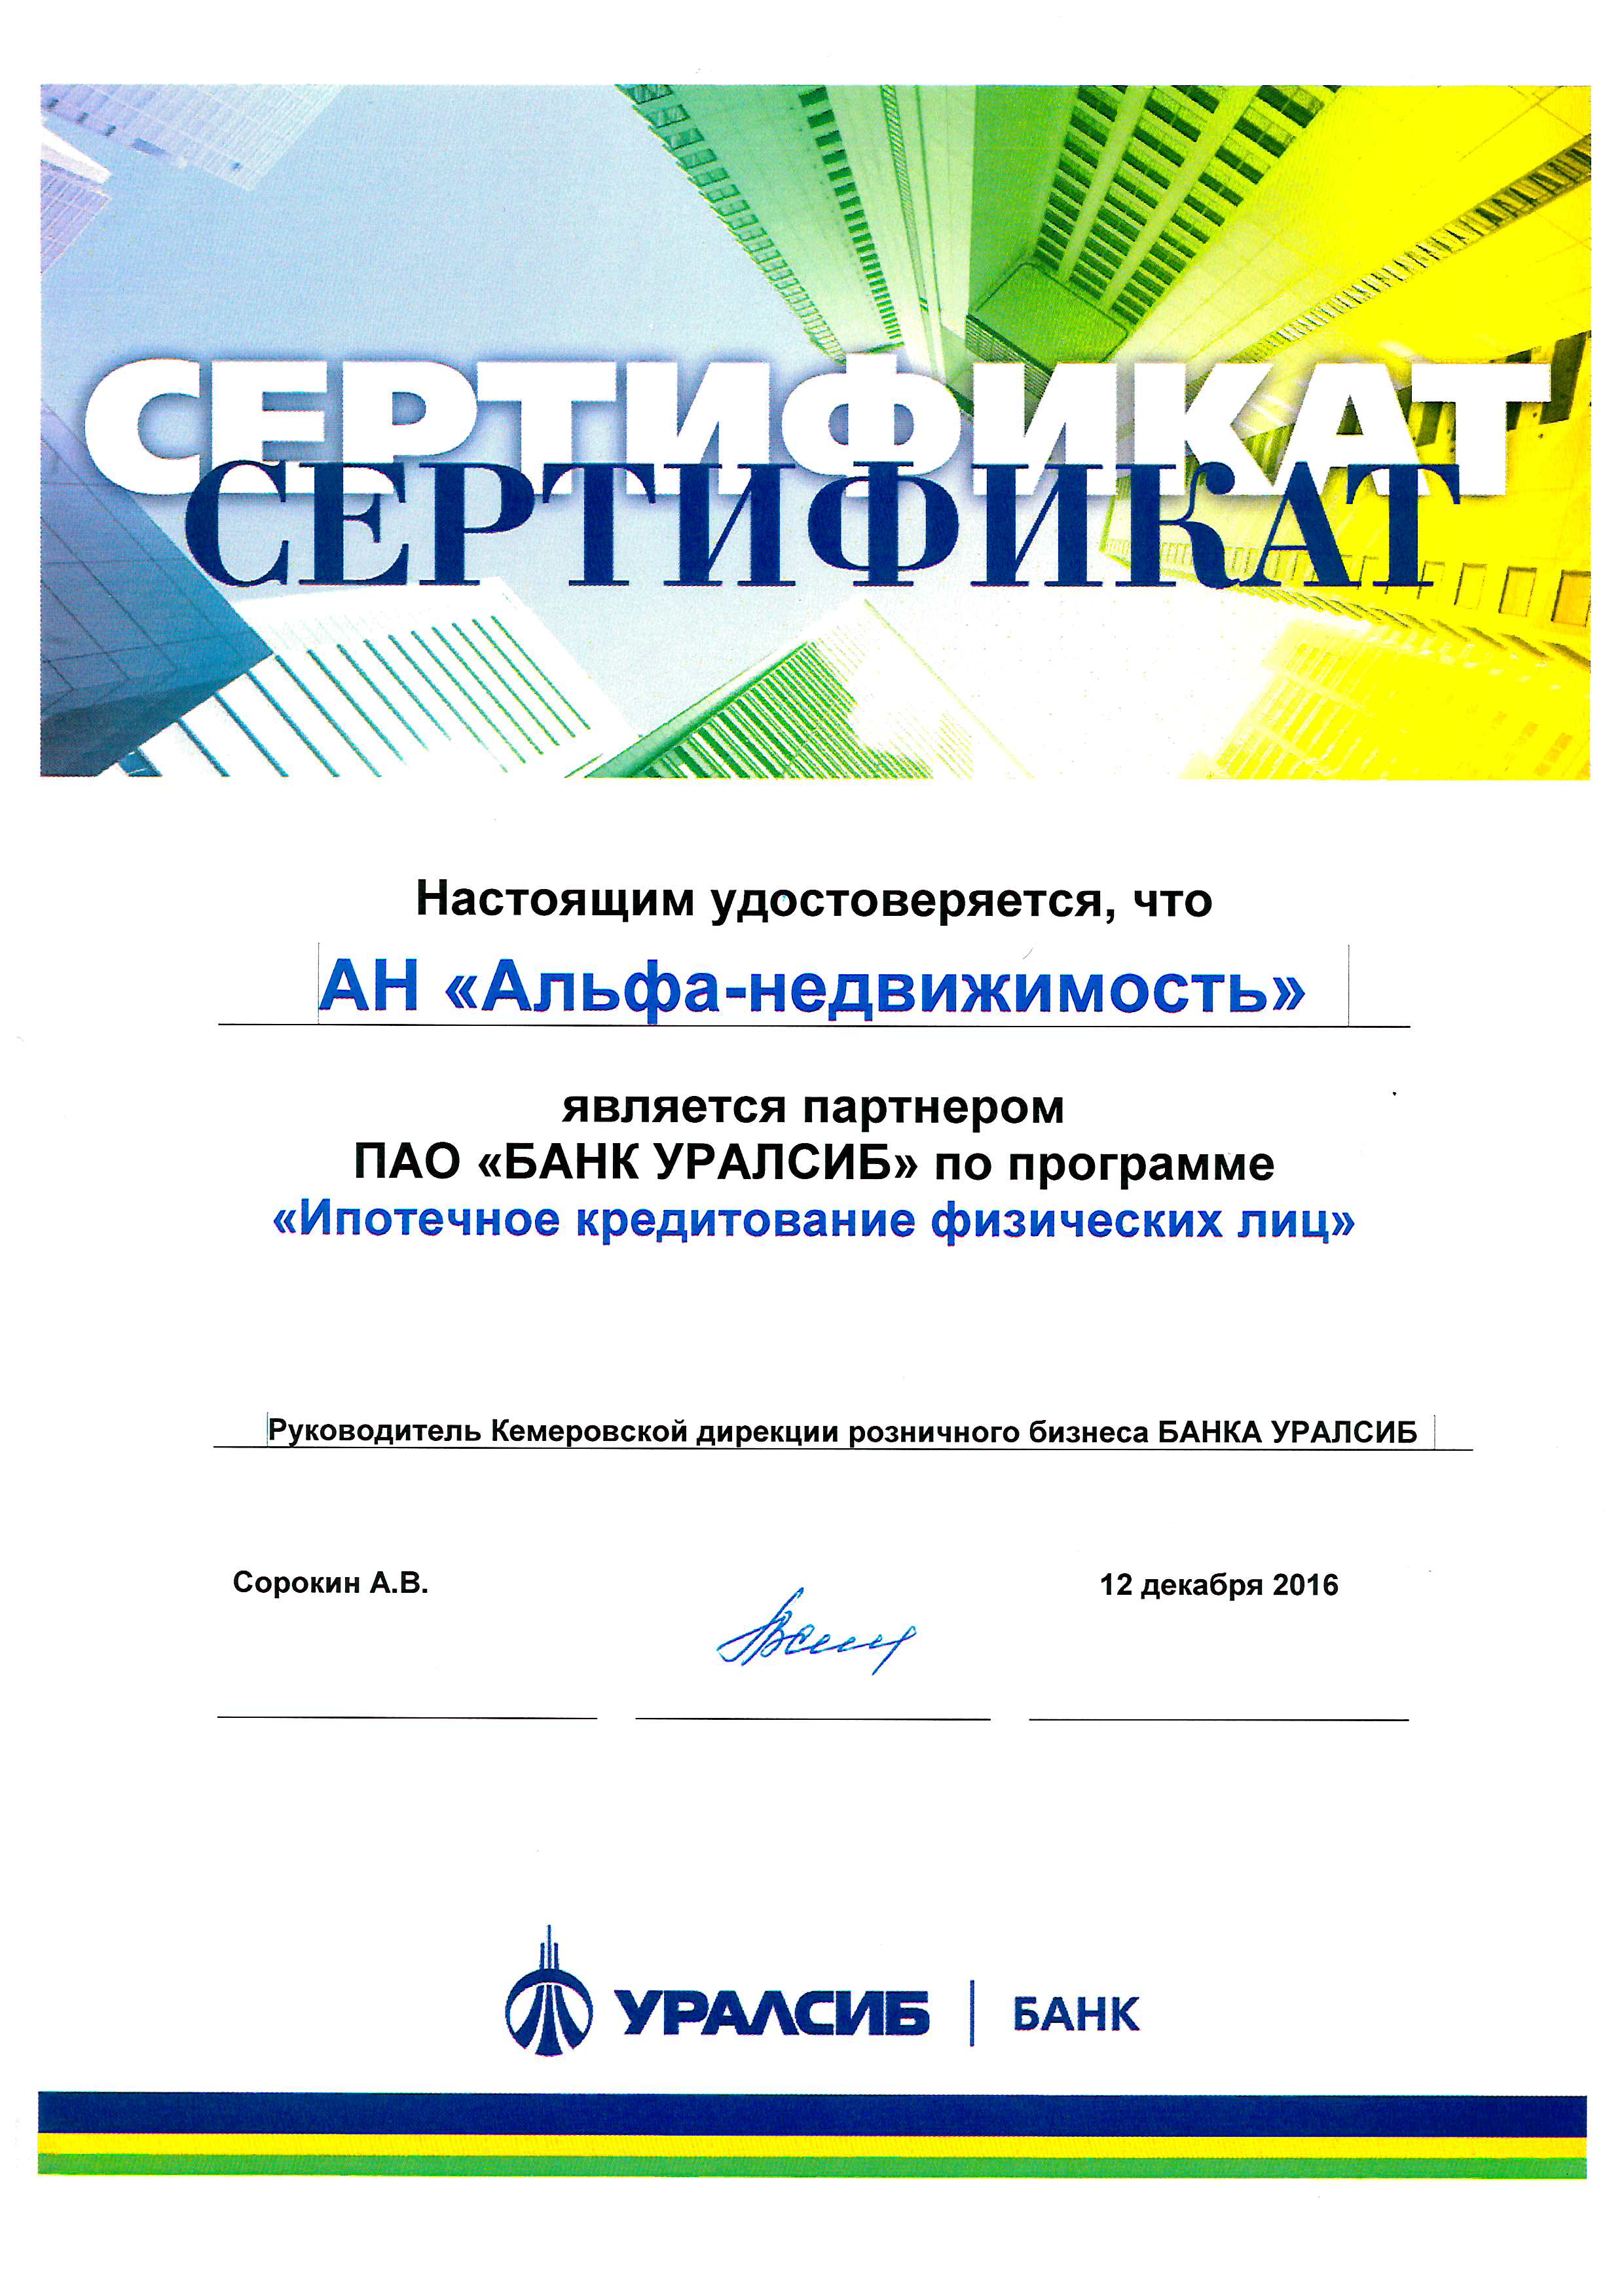 Сертификат банка "Уралсиб"